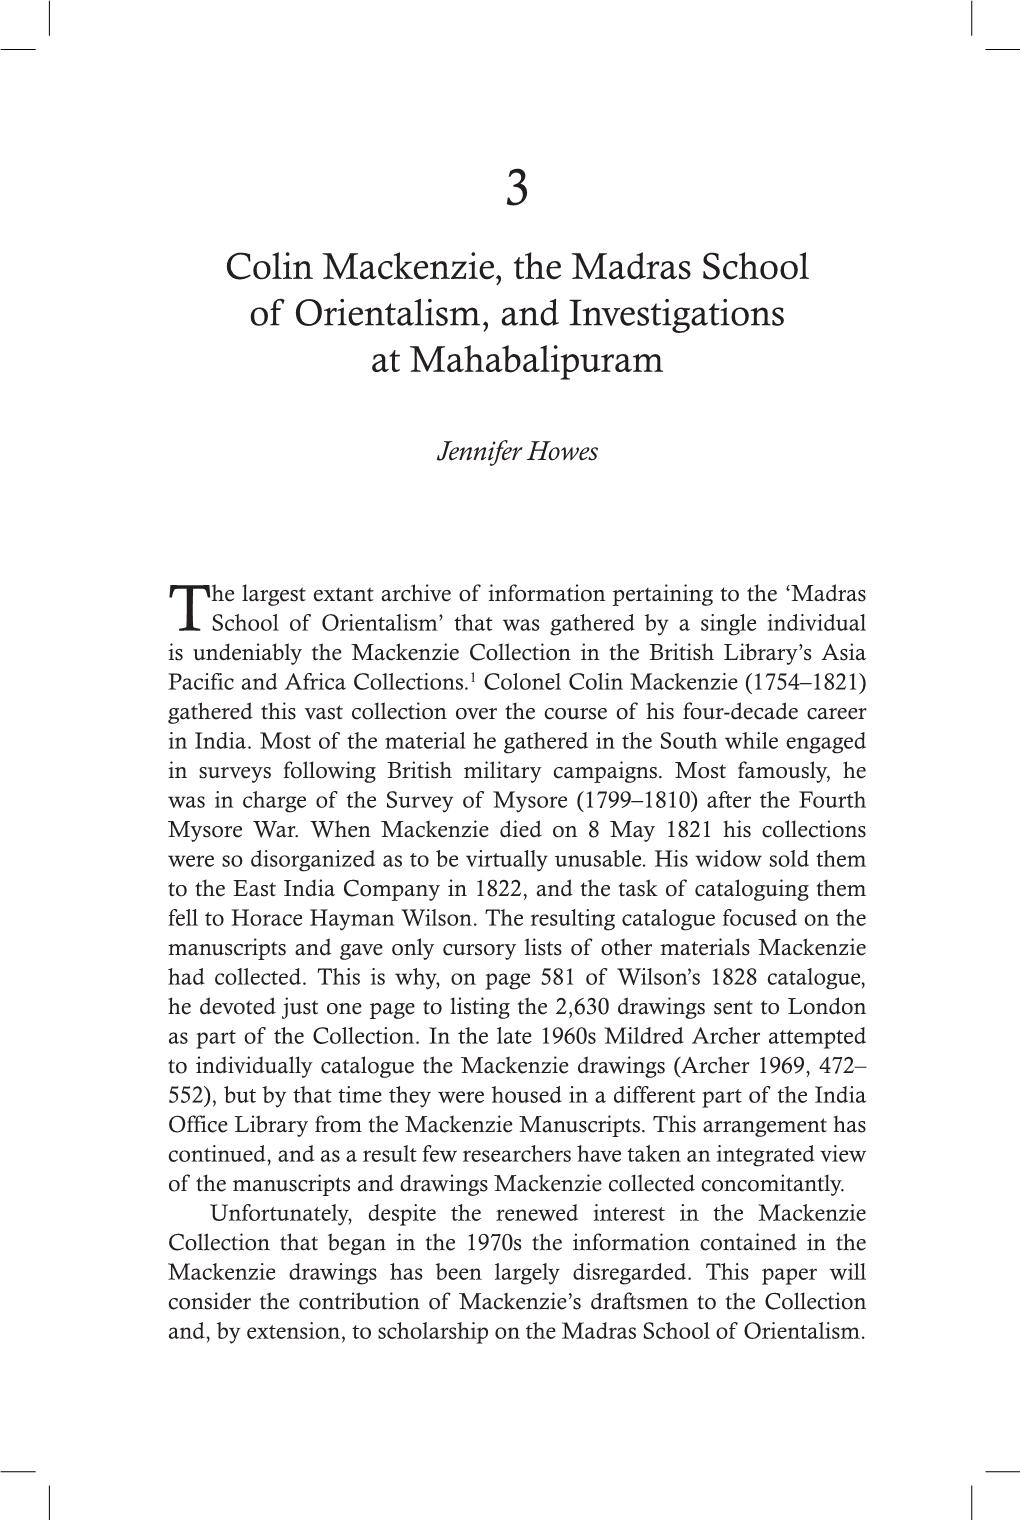 Colin Mackenzie, the Madras School of Orientalism, and Investigations at Mahabalipuram